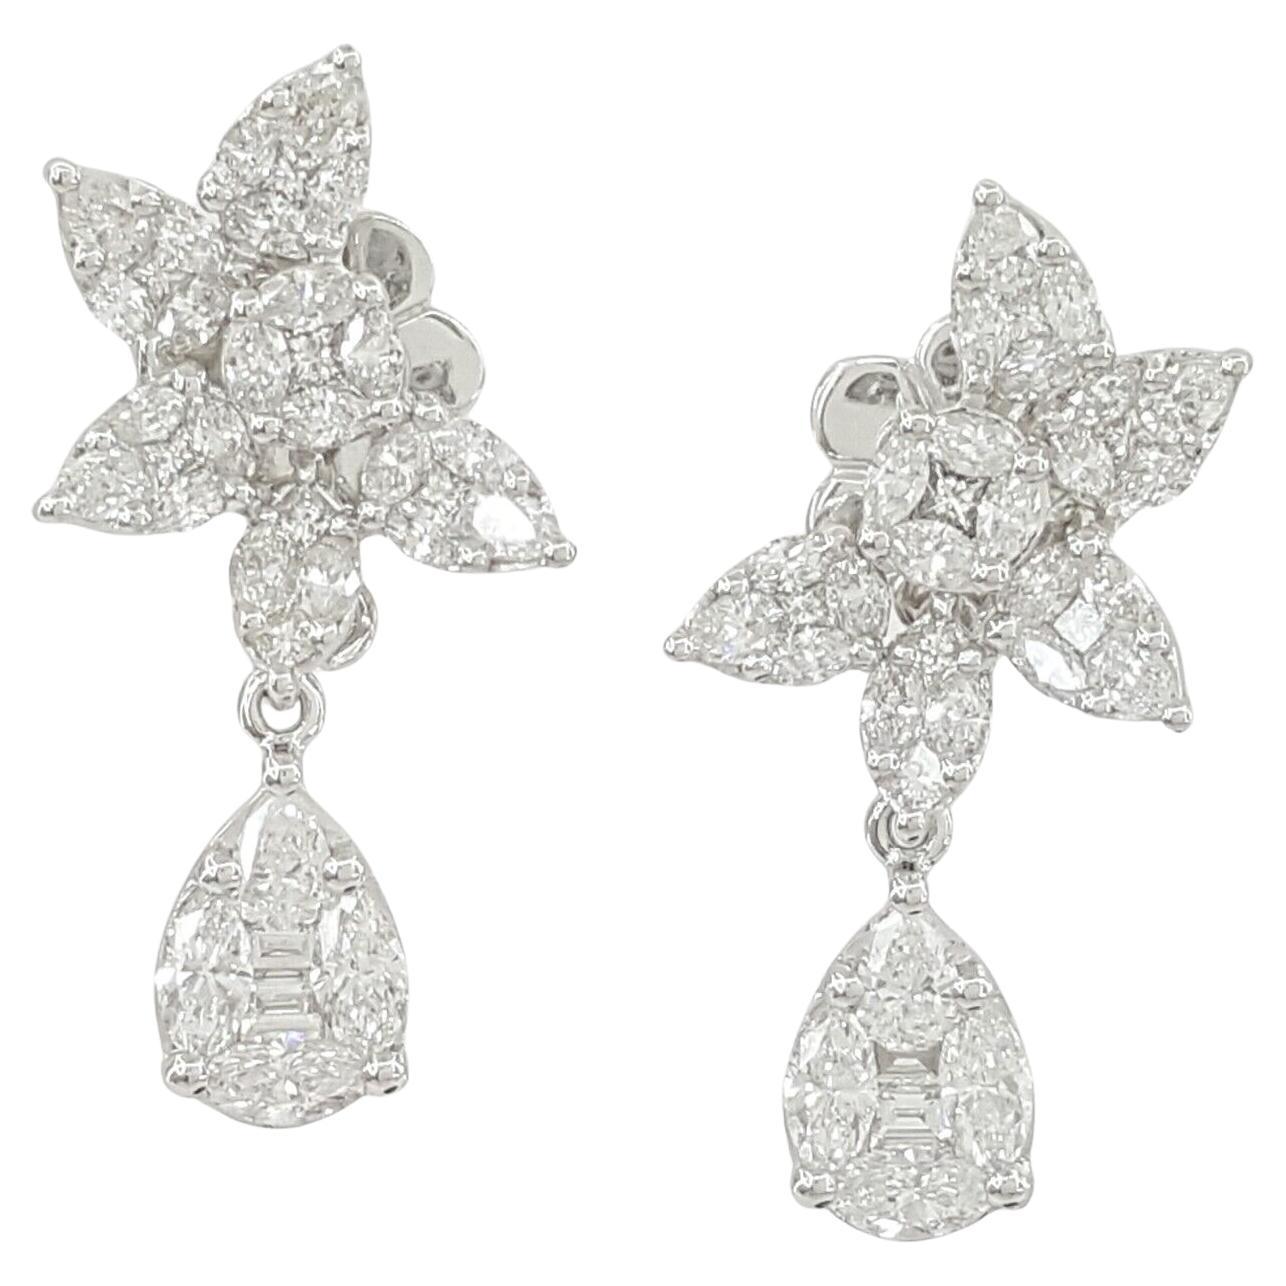 3 Carat Diamond Cluster Earrings E/F Color For Sale